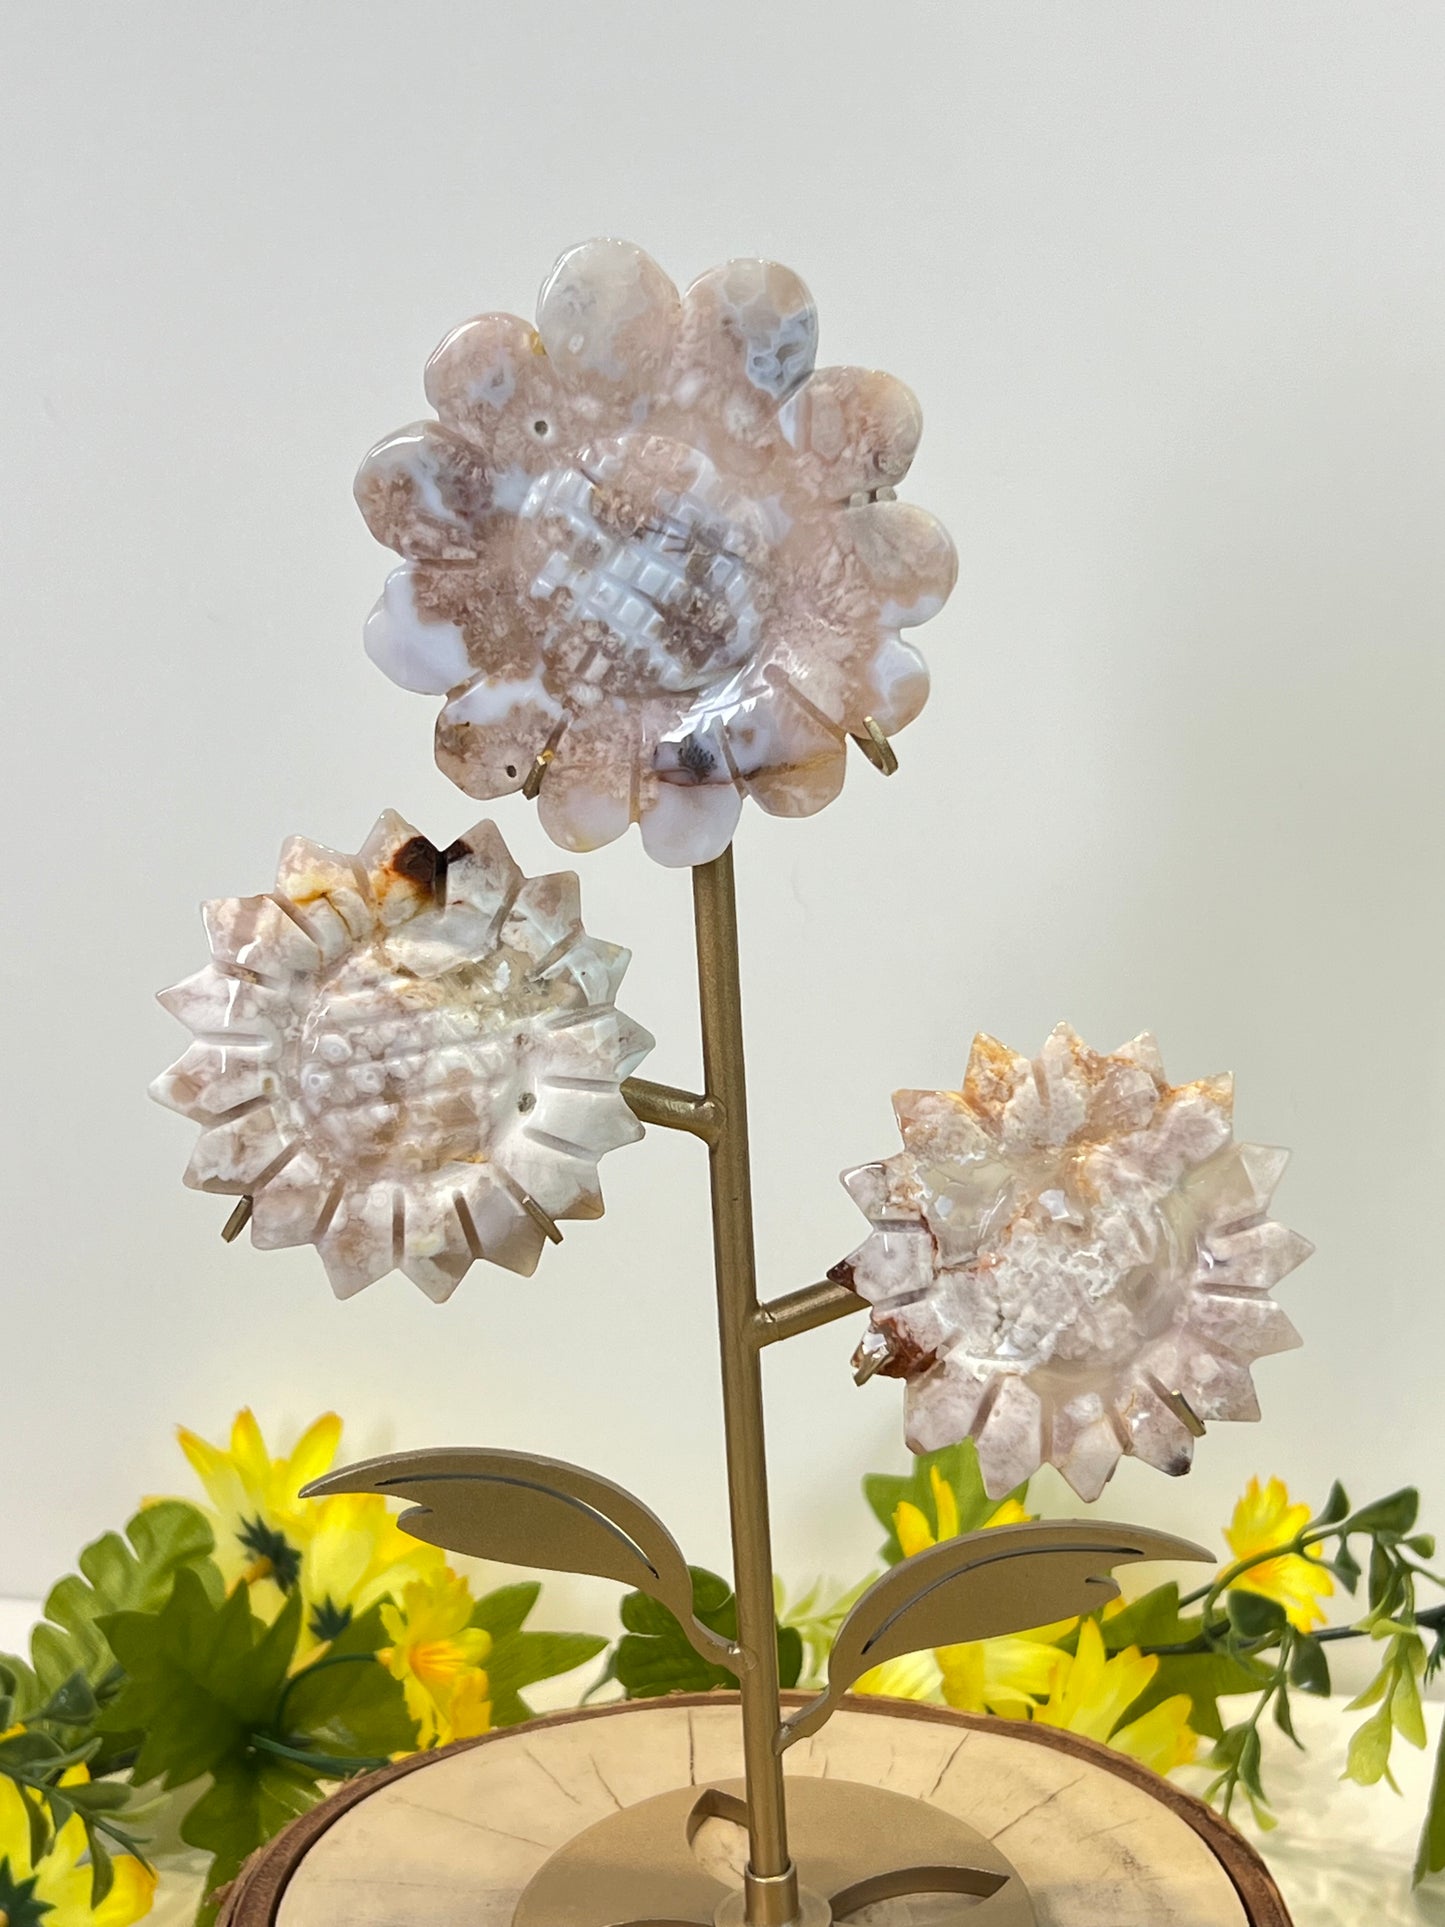 Flower Agate Sunflower Stand